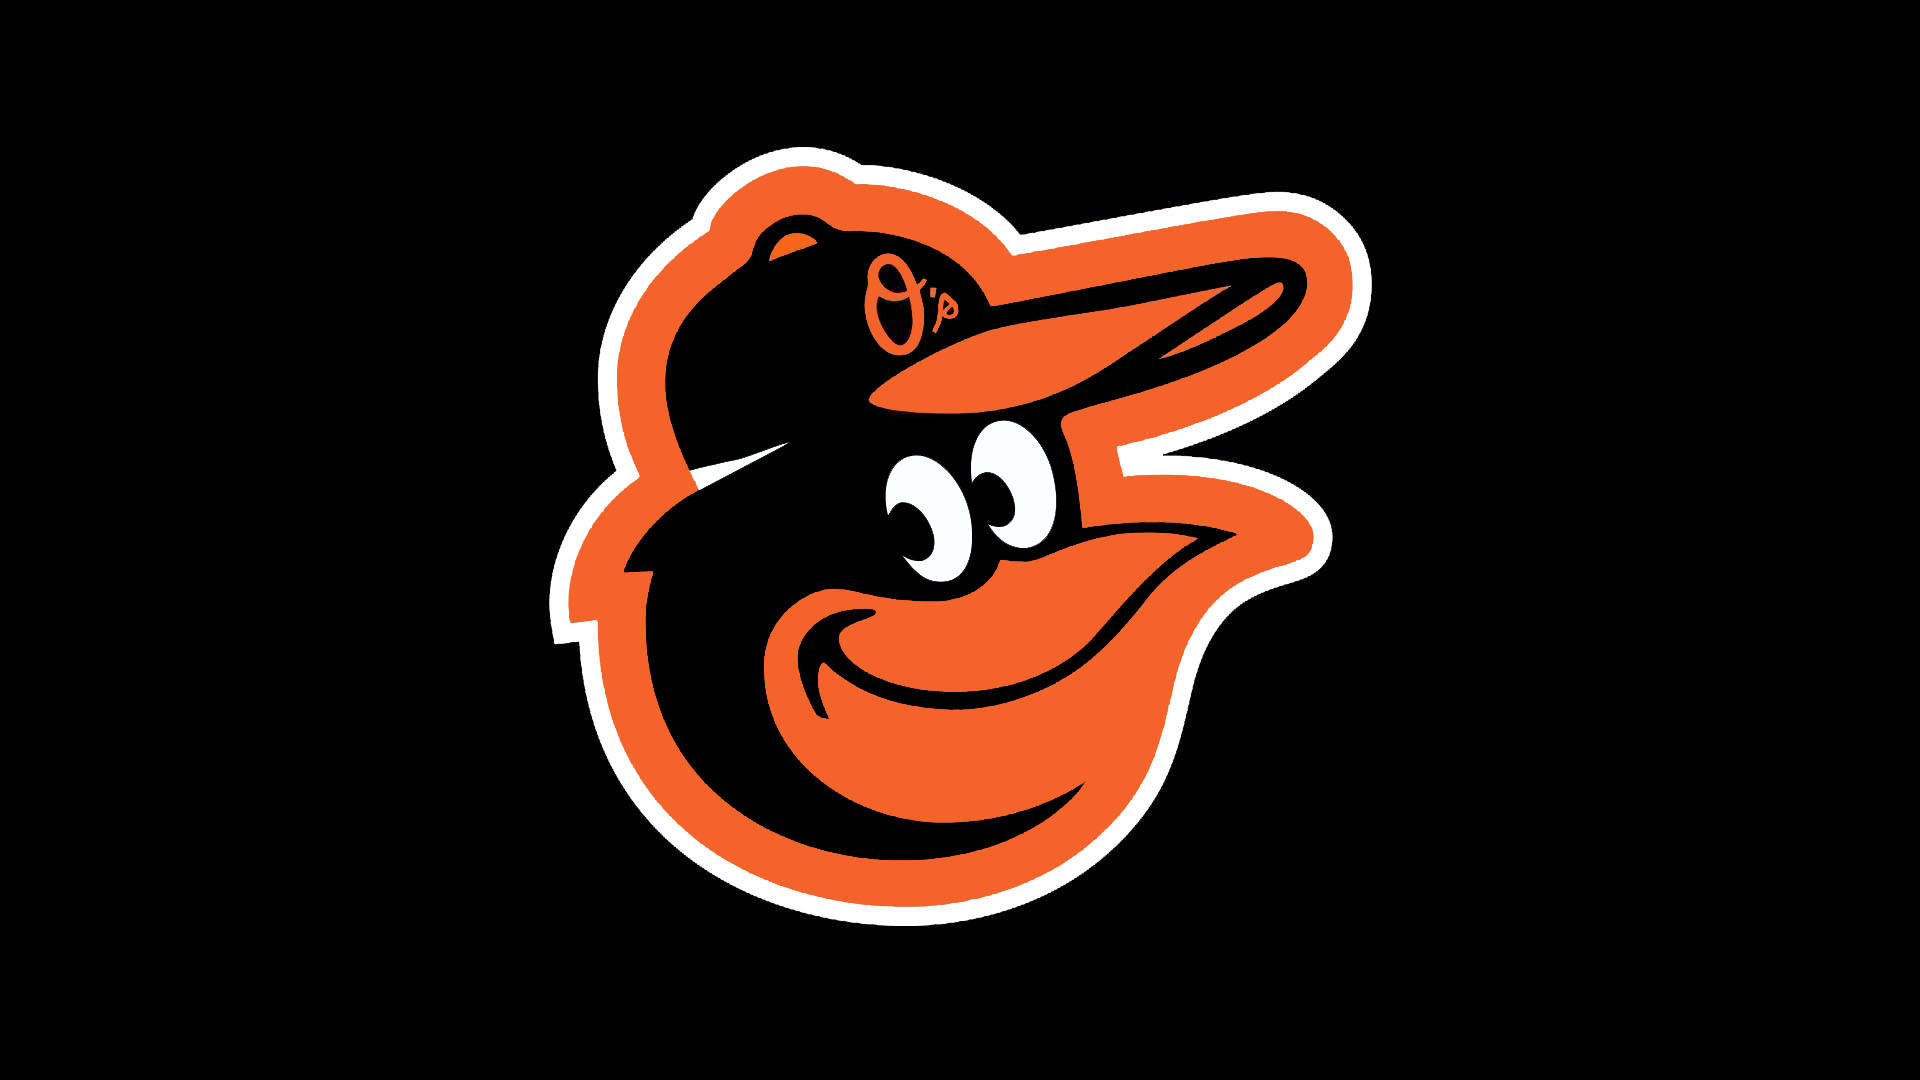 Baltimore Orioles 2019 Black Background Background